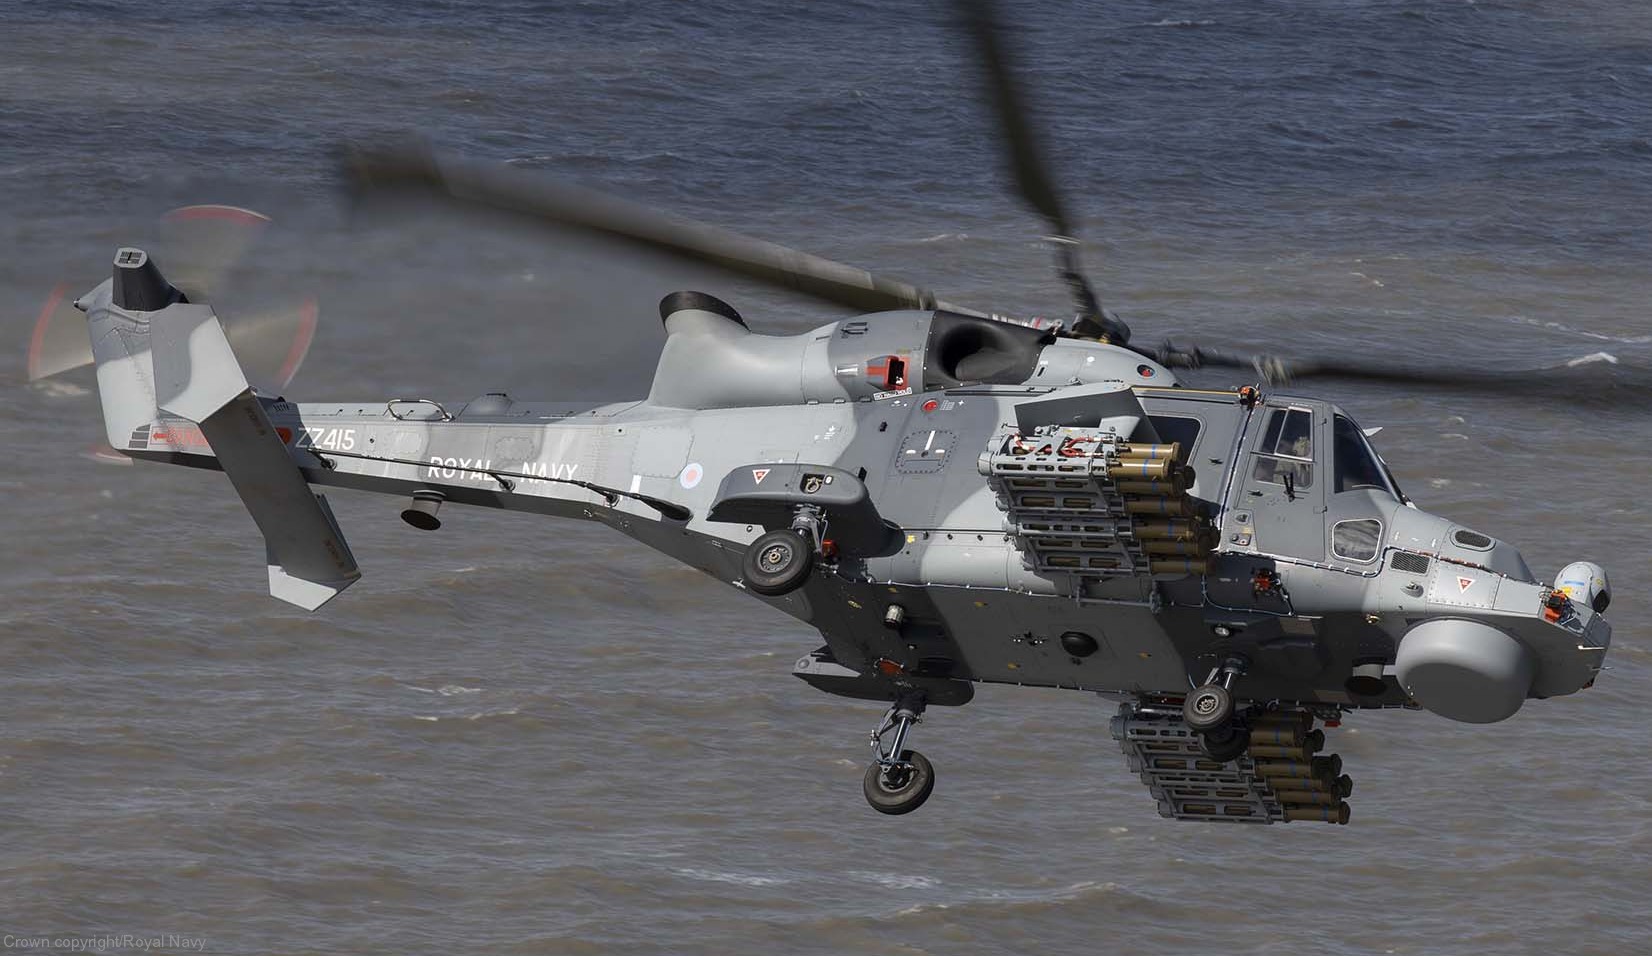 martlet lmm lightweight multirole missile royal navy thales wildcat hma2 helicopter 12